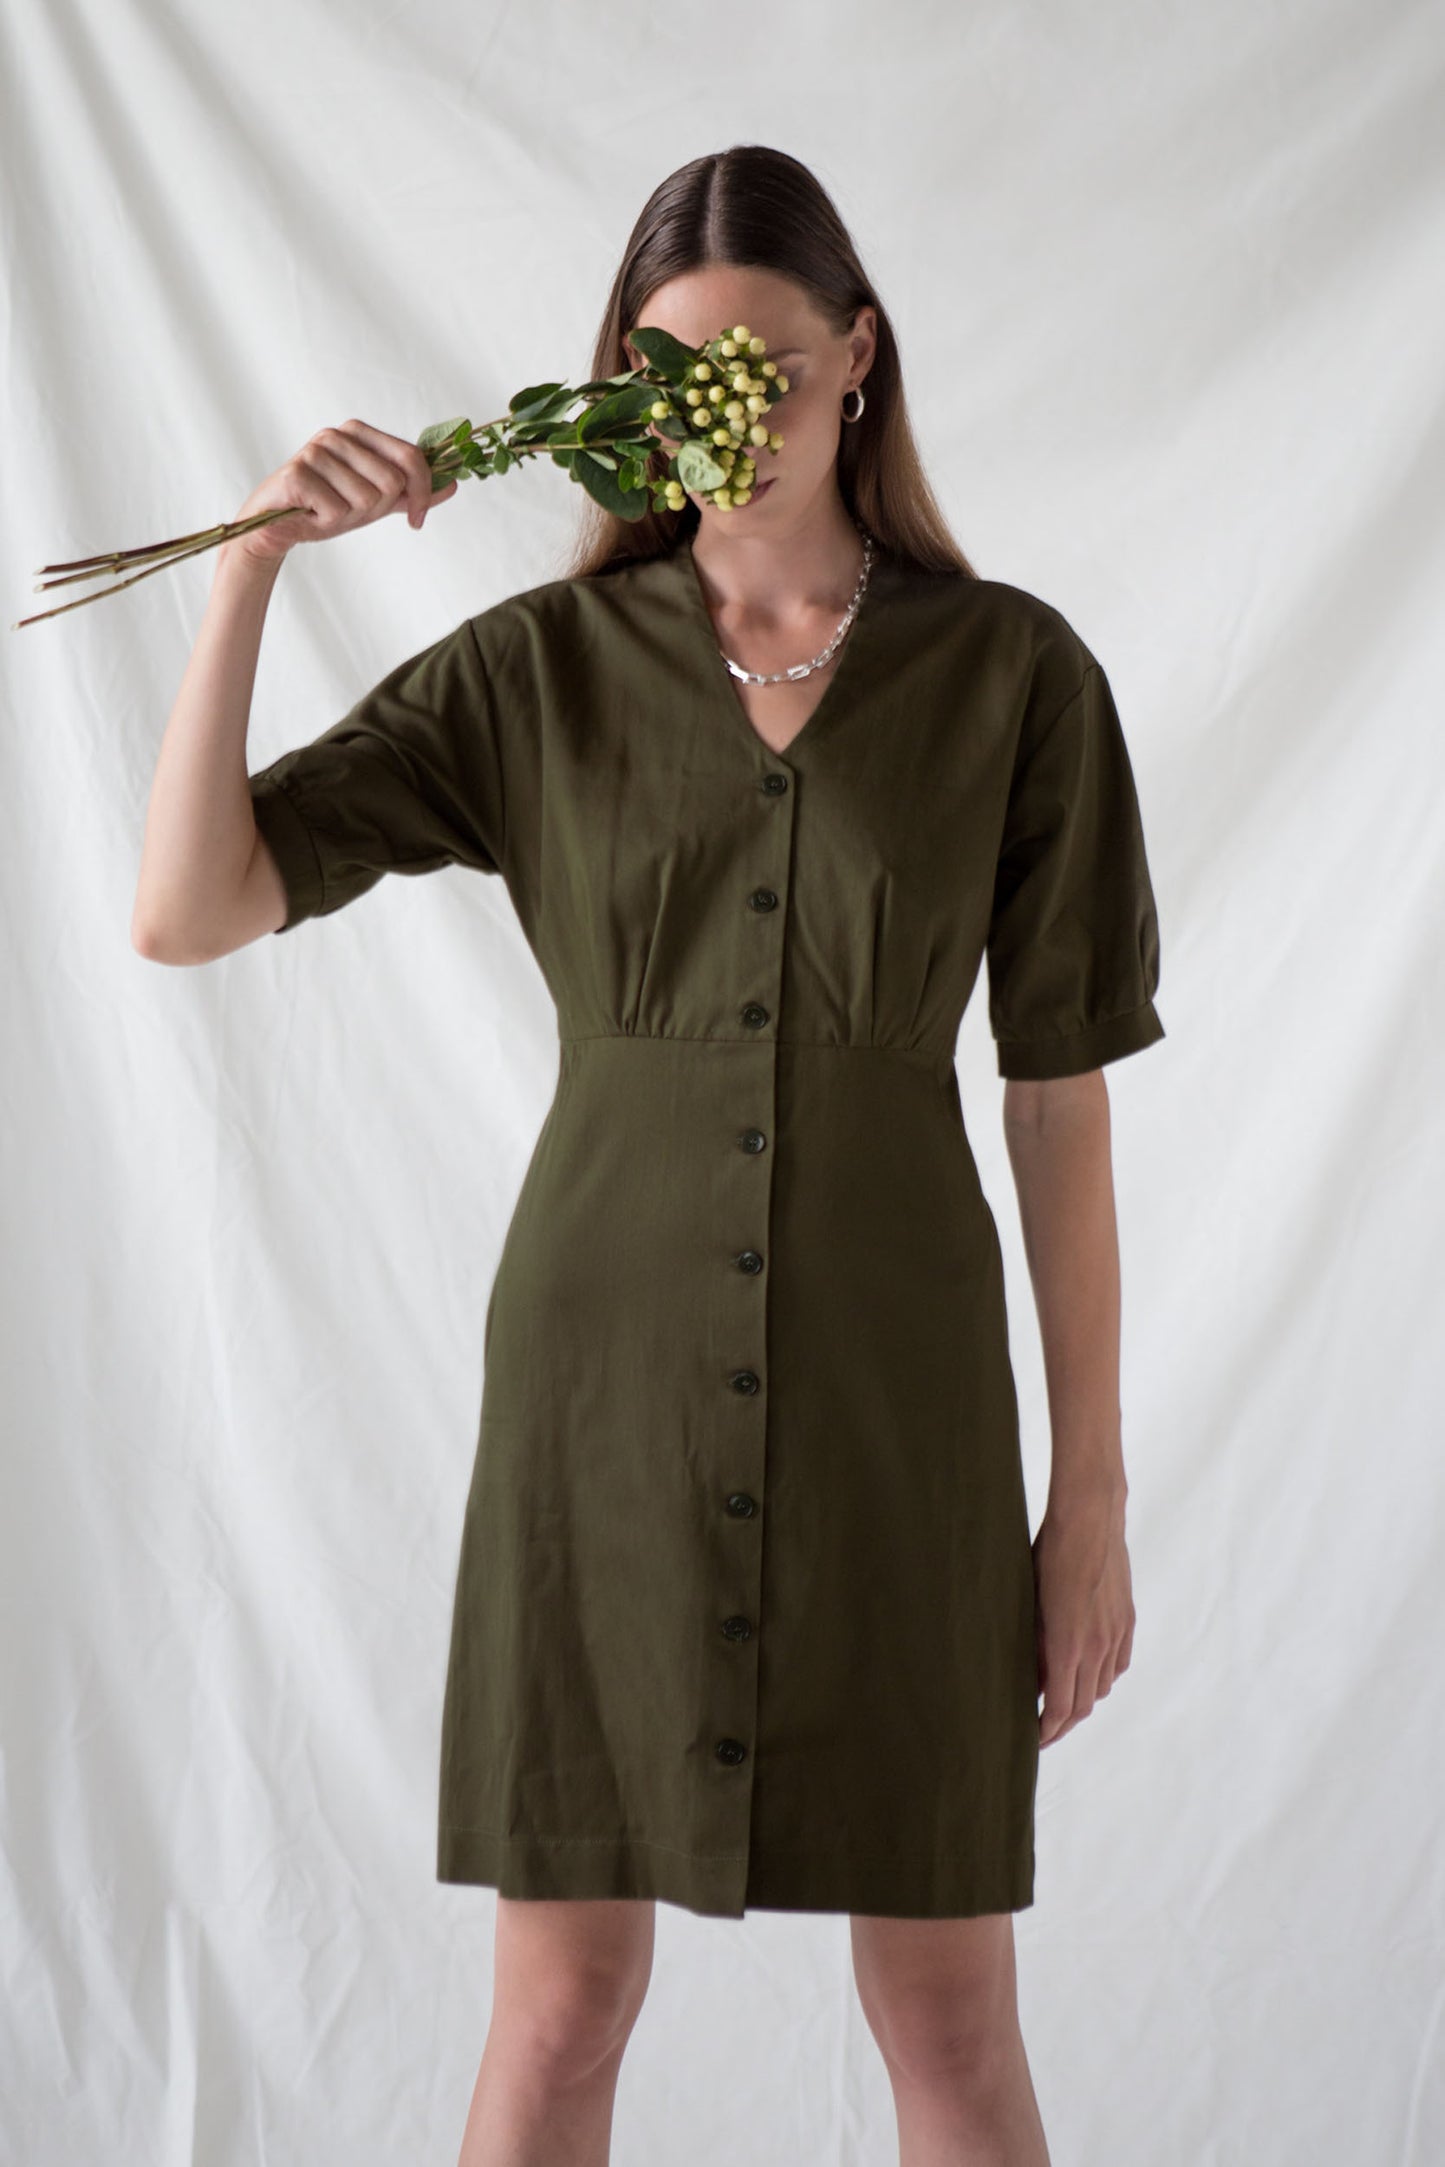 Dark green organic cotton dress with puff sleeves, knee length